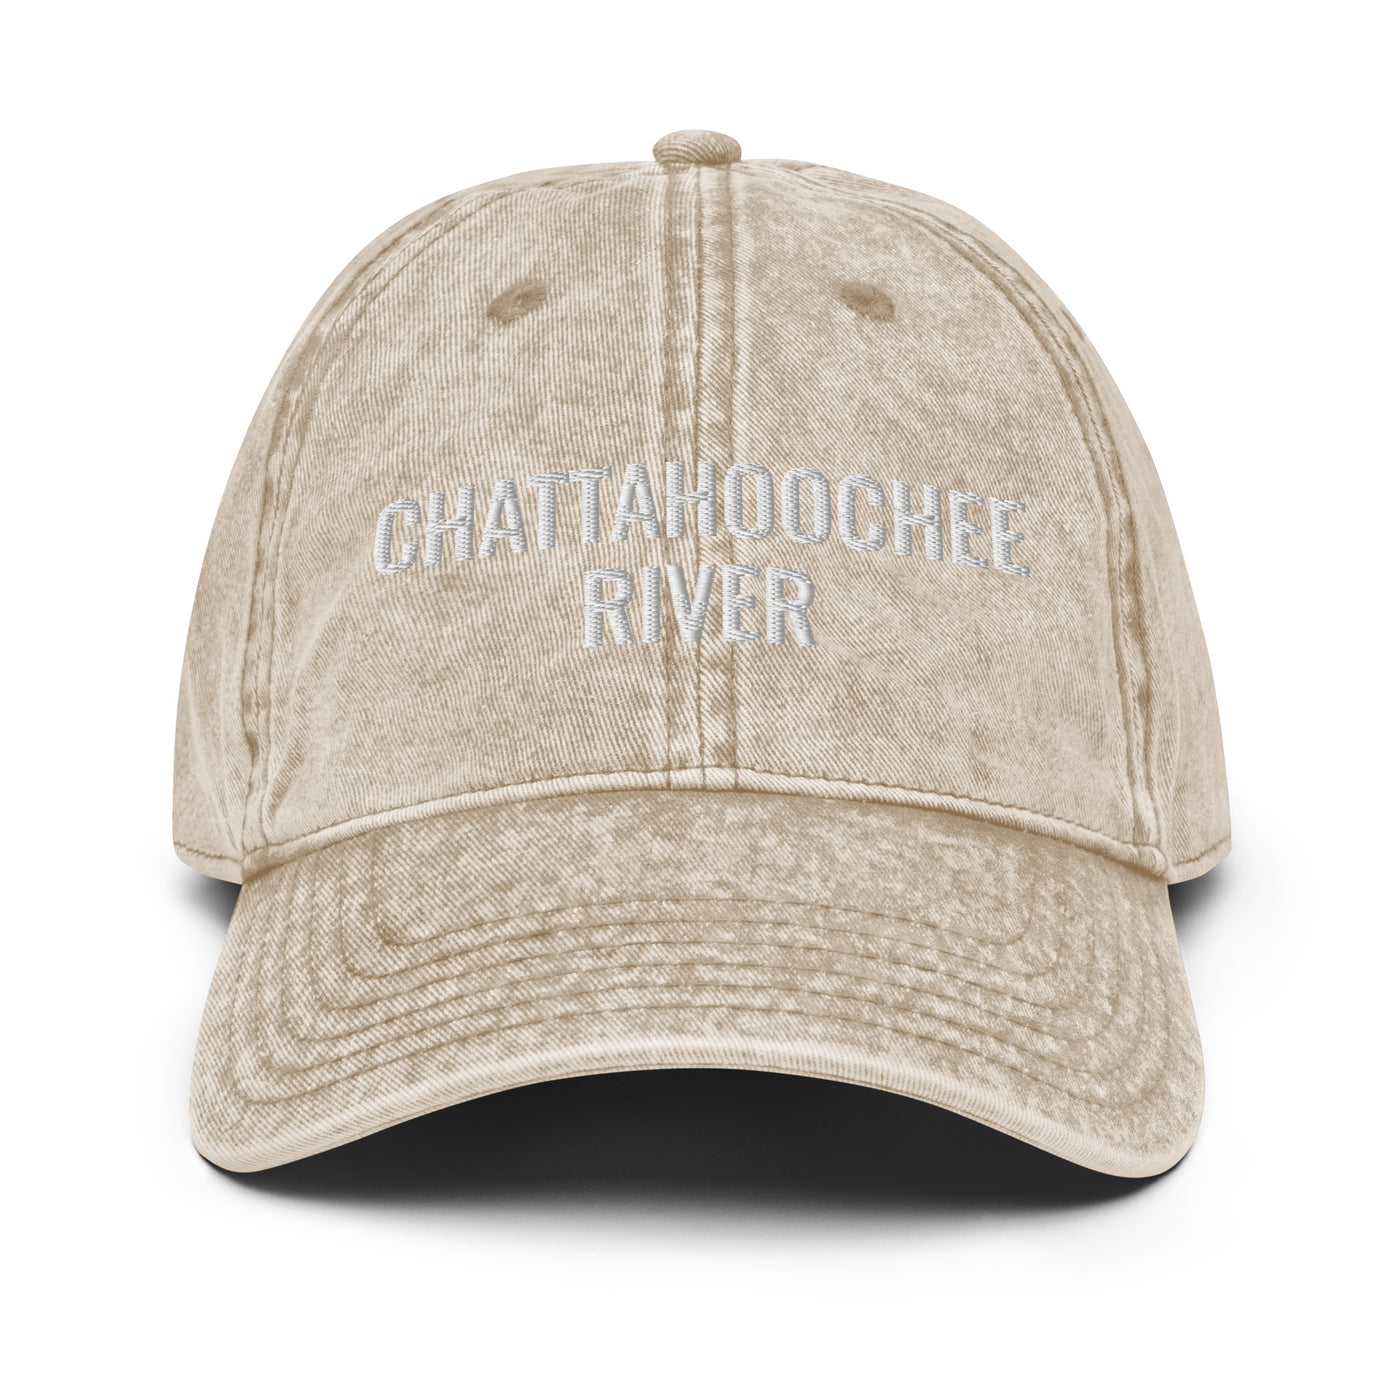 Chattahoochee River Hat Hats Ezra's Clothing Khaki  